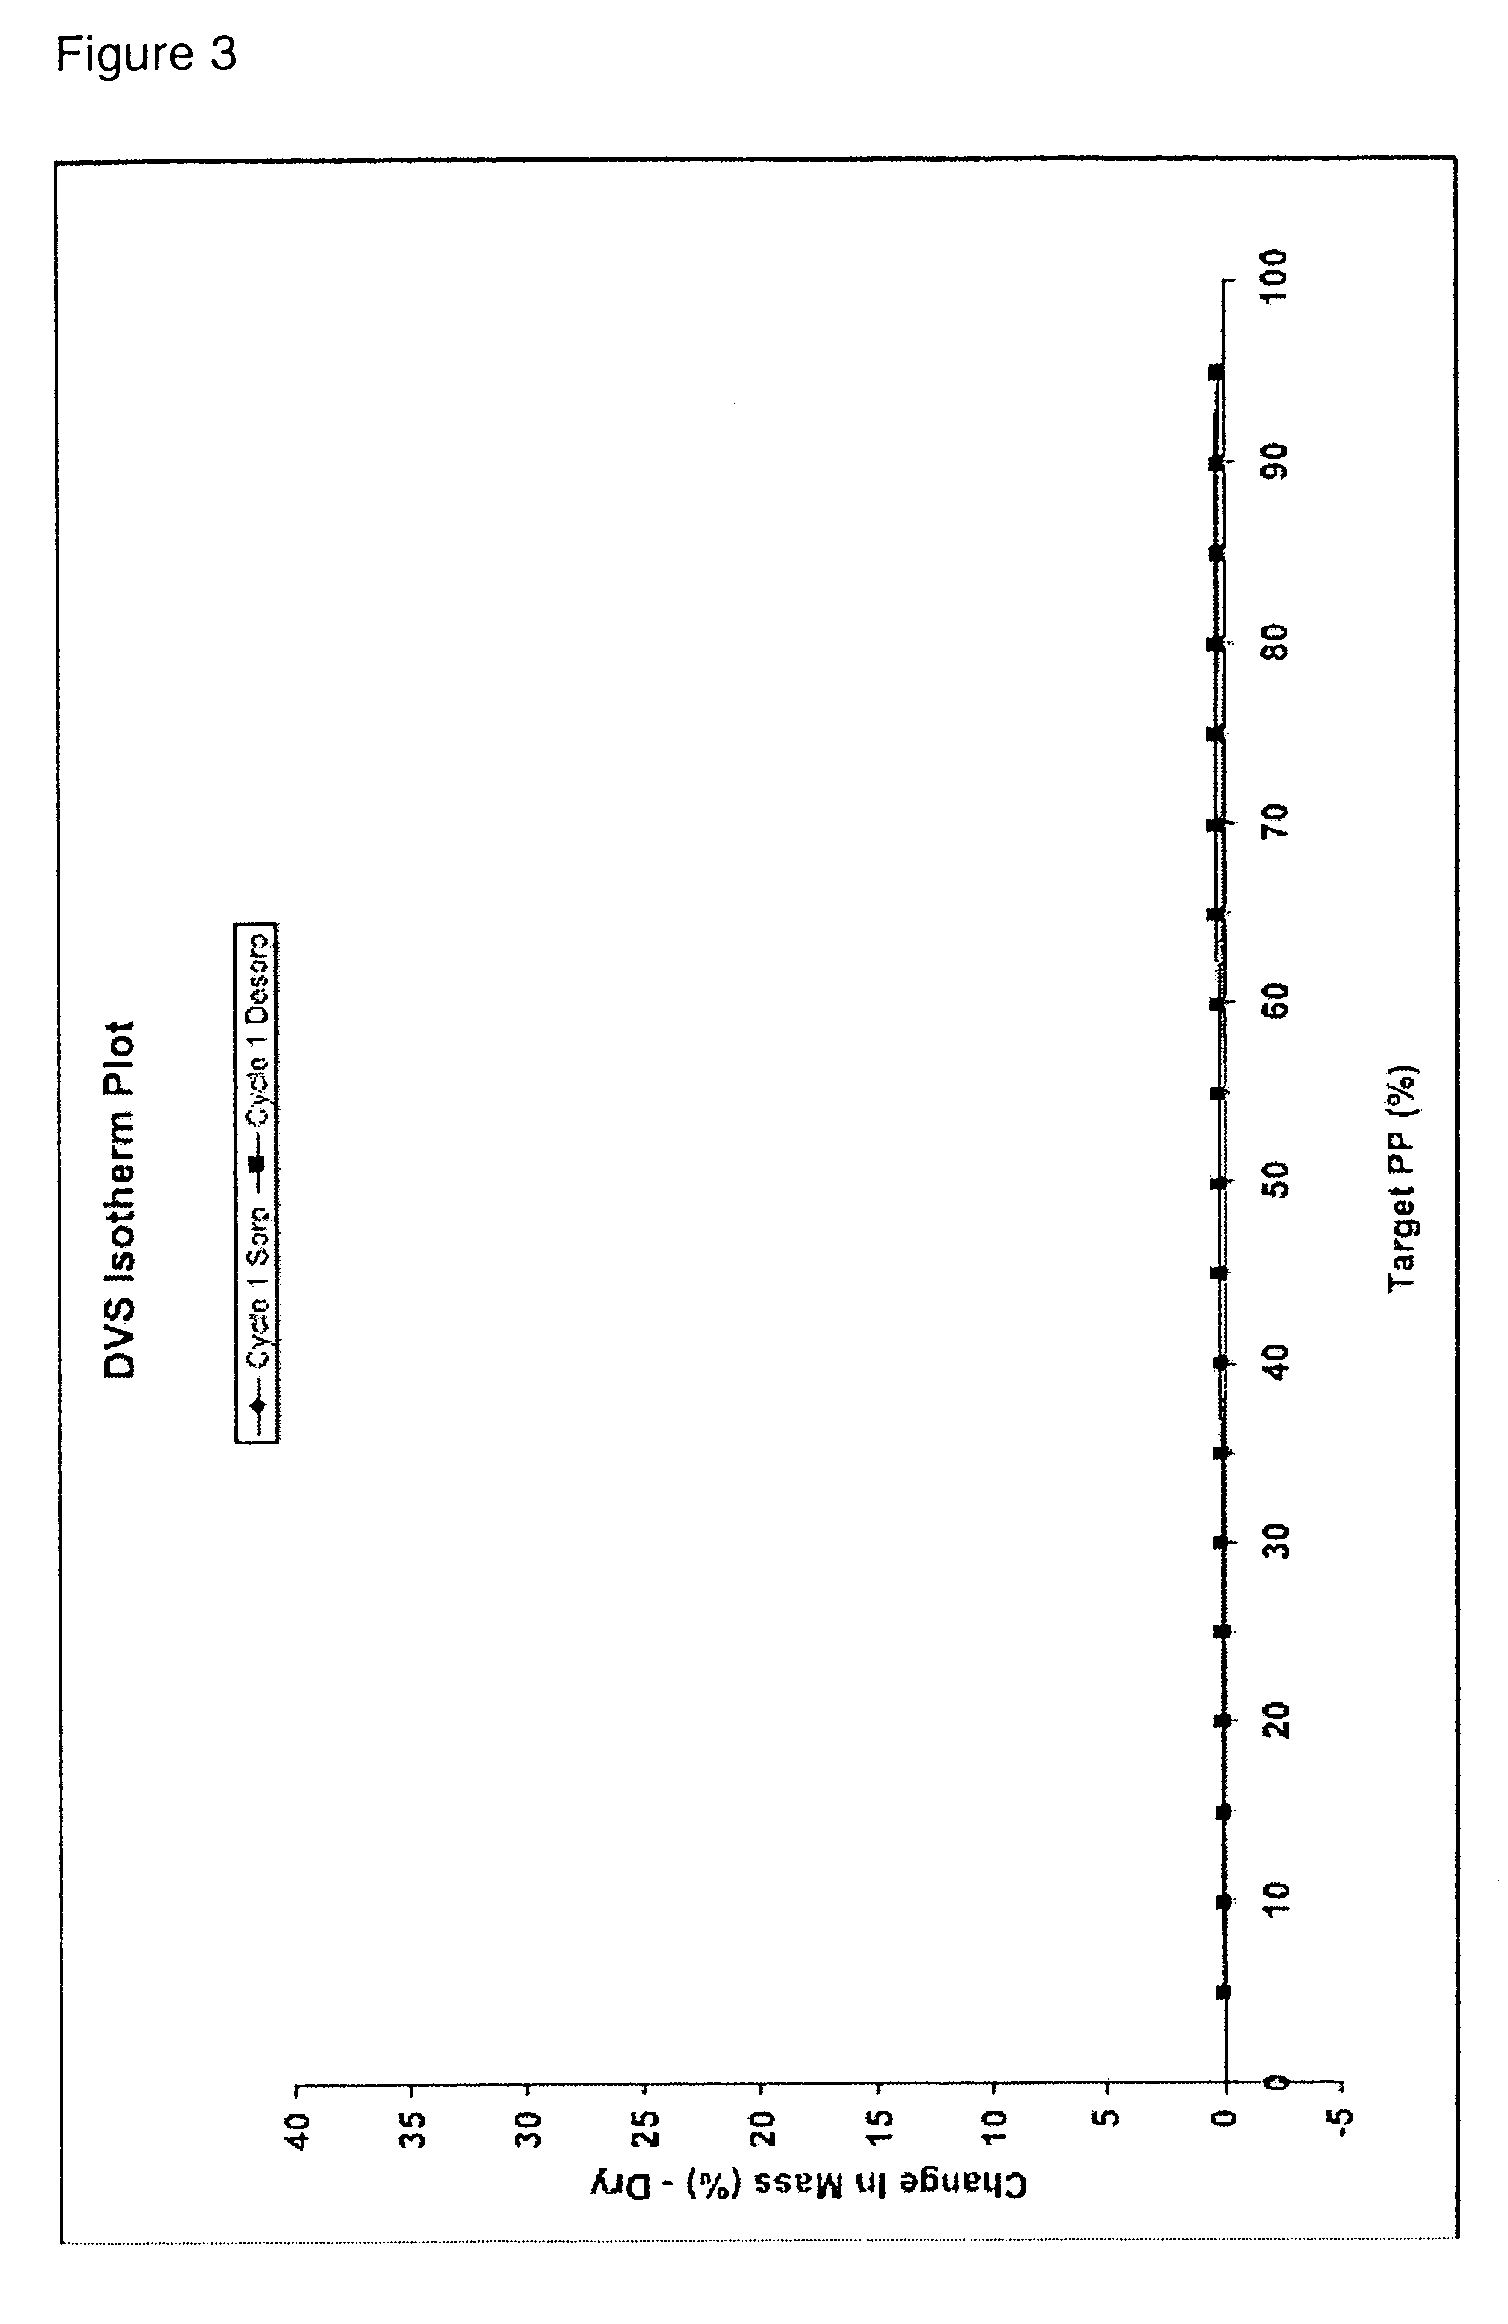 Salts of quinuclidine derivative